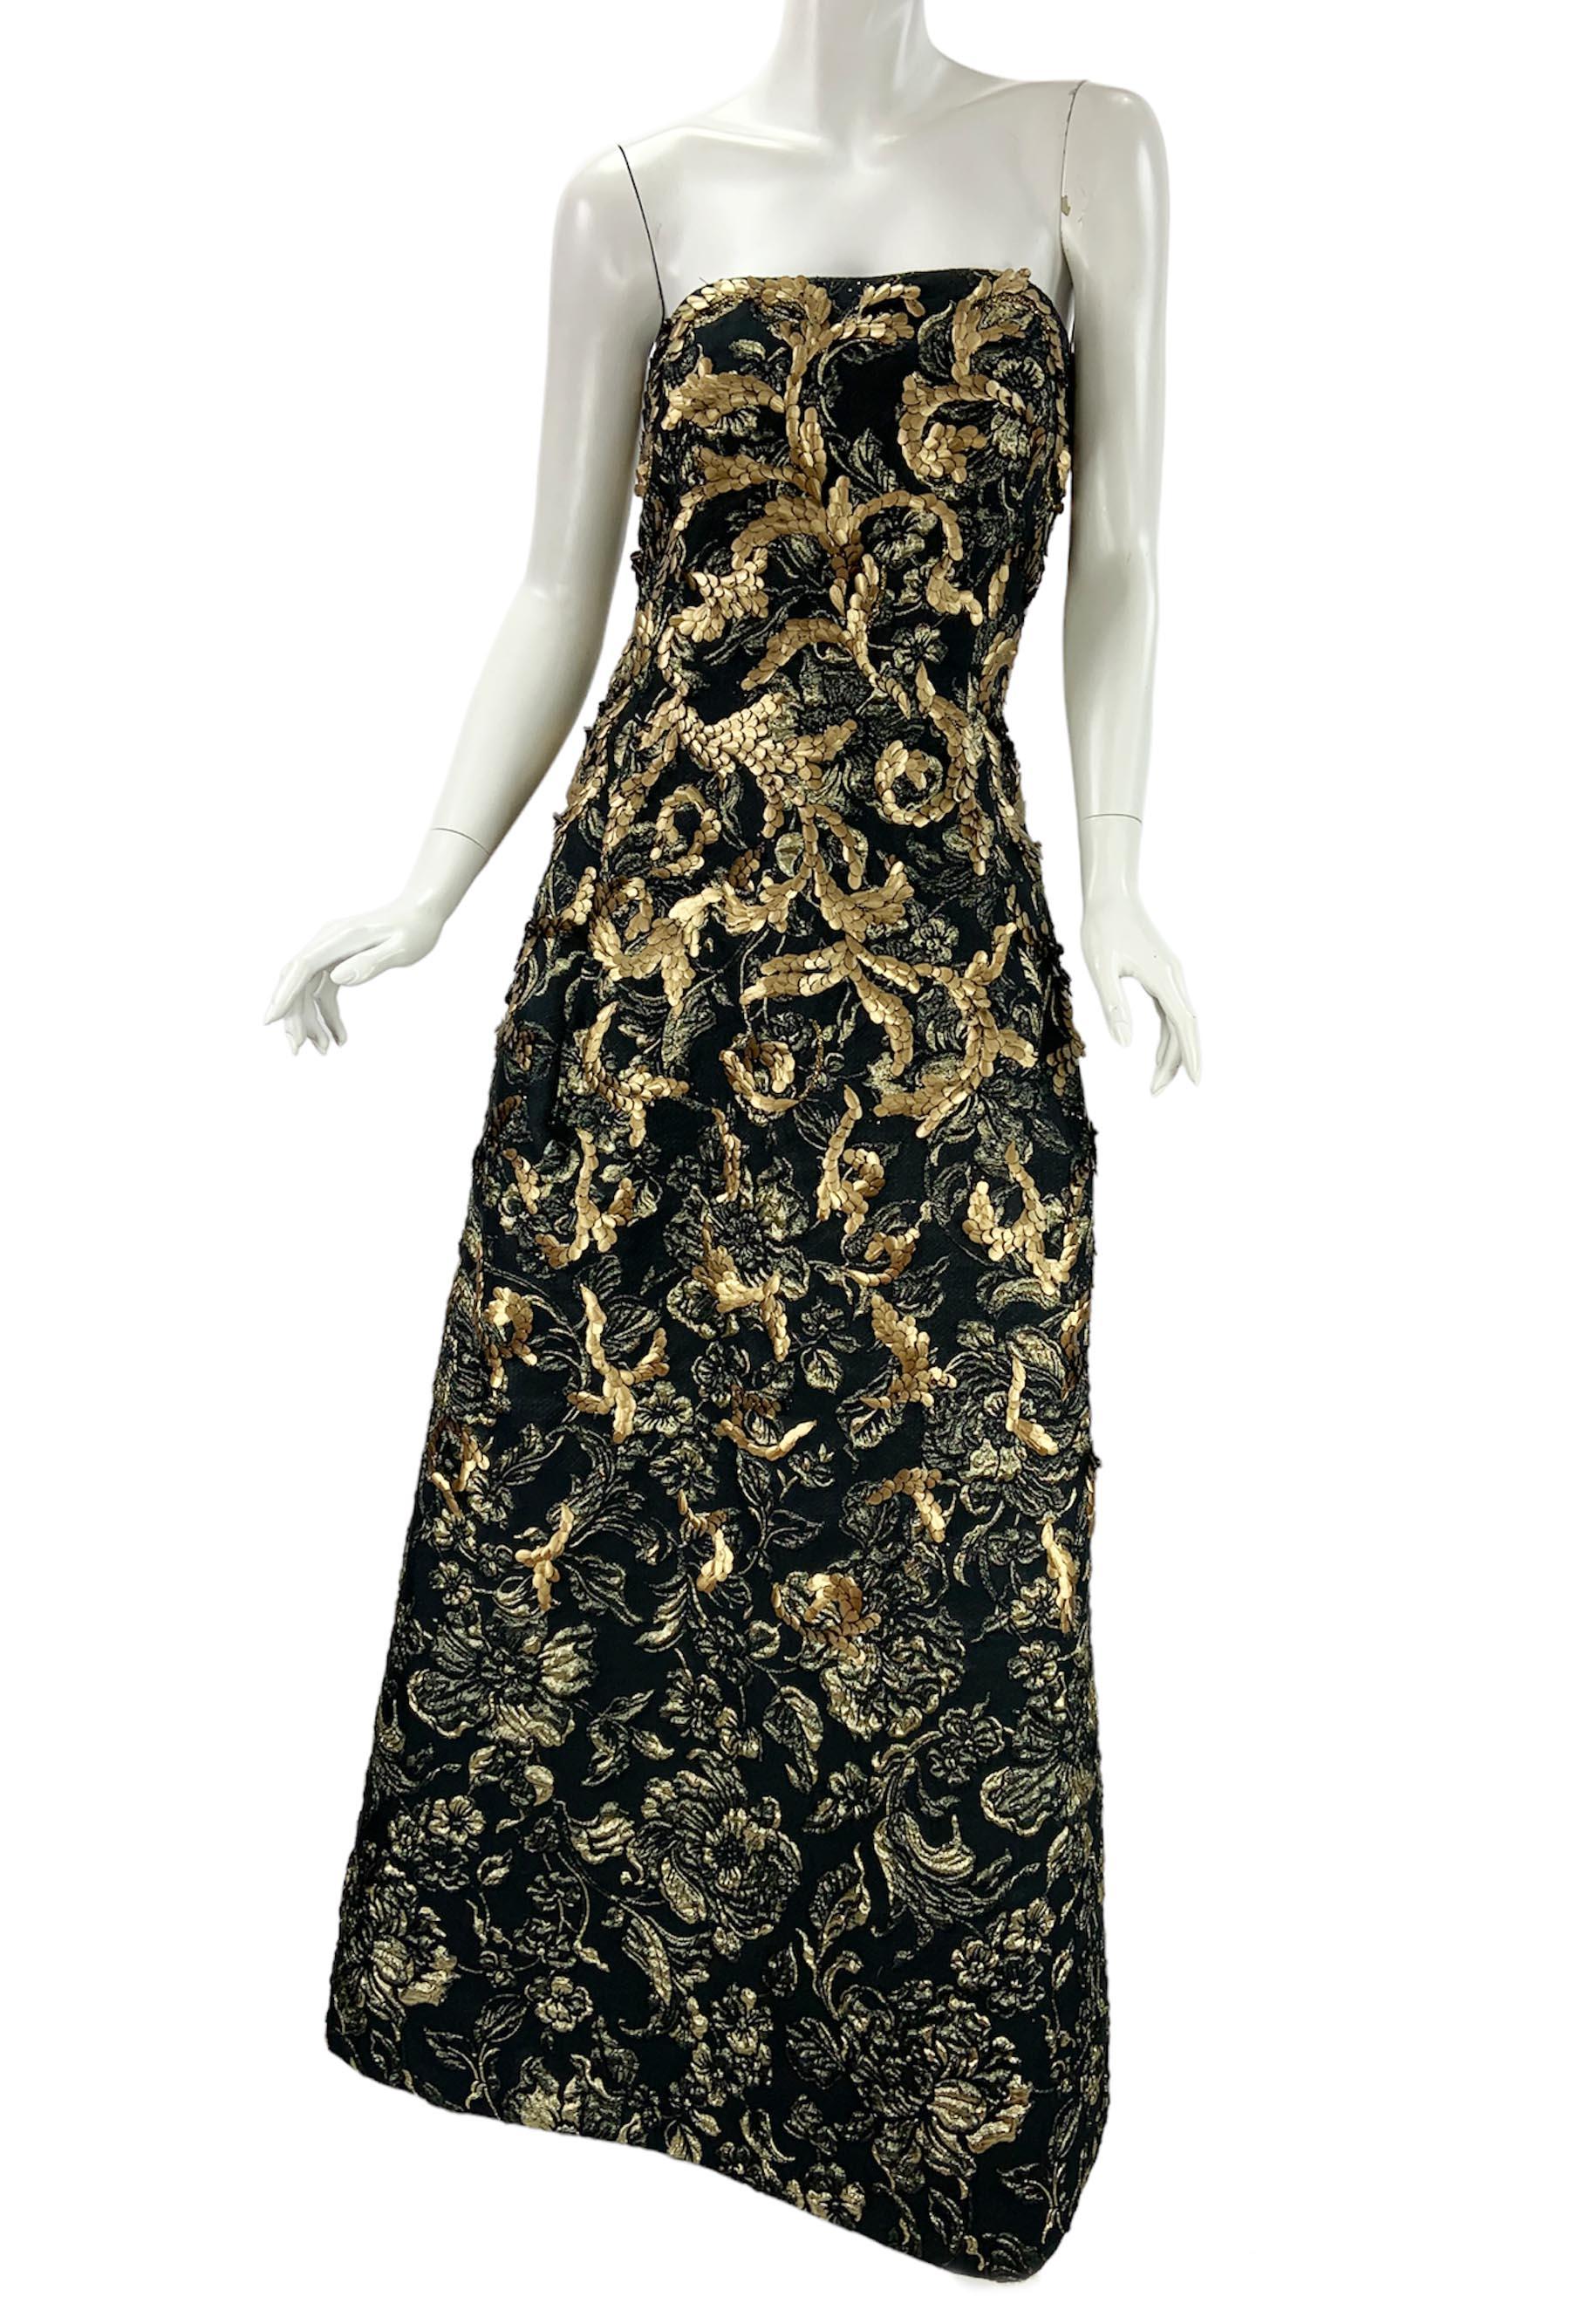 Oscar de la Renta H/W 2014 Laufsteg Museum Roter Teppich Schwarzes Goldkleid Kleid L / XL im Angebot 2